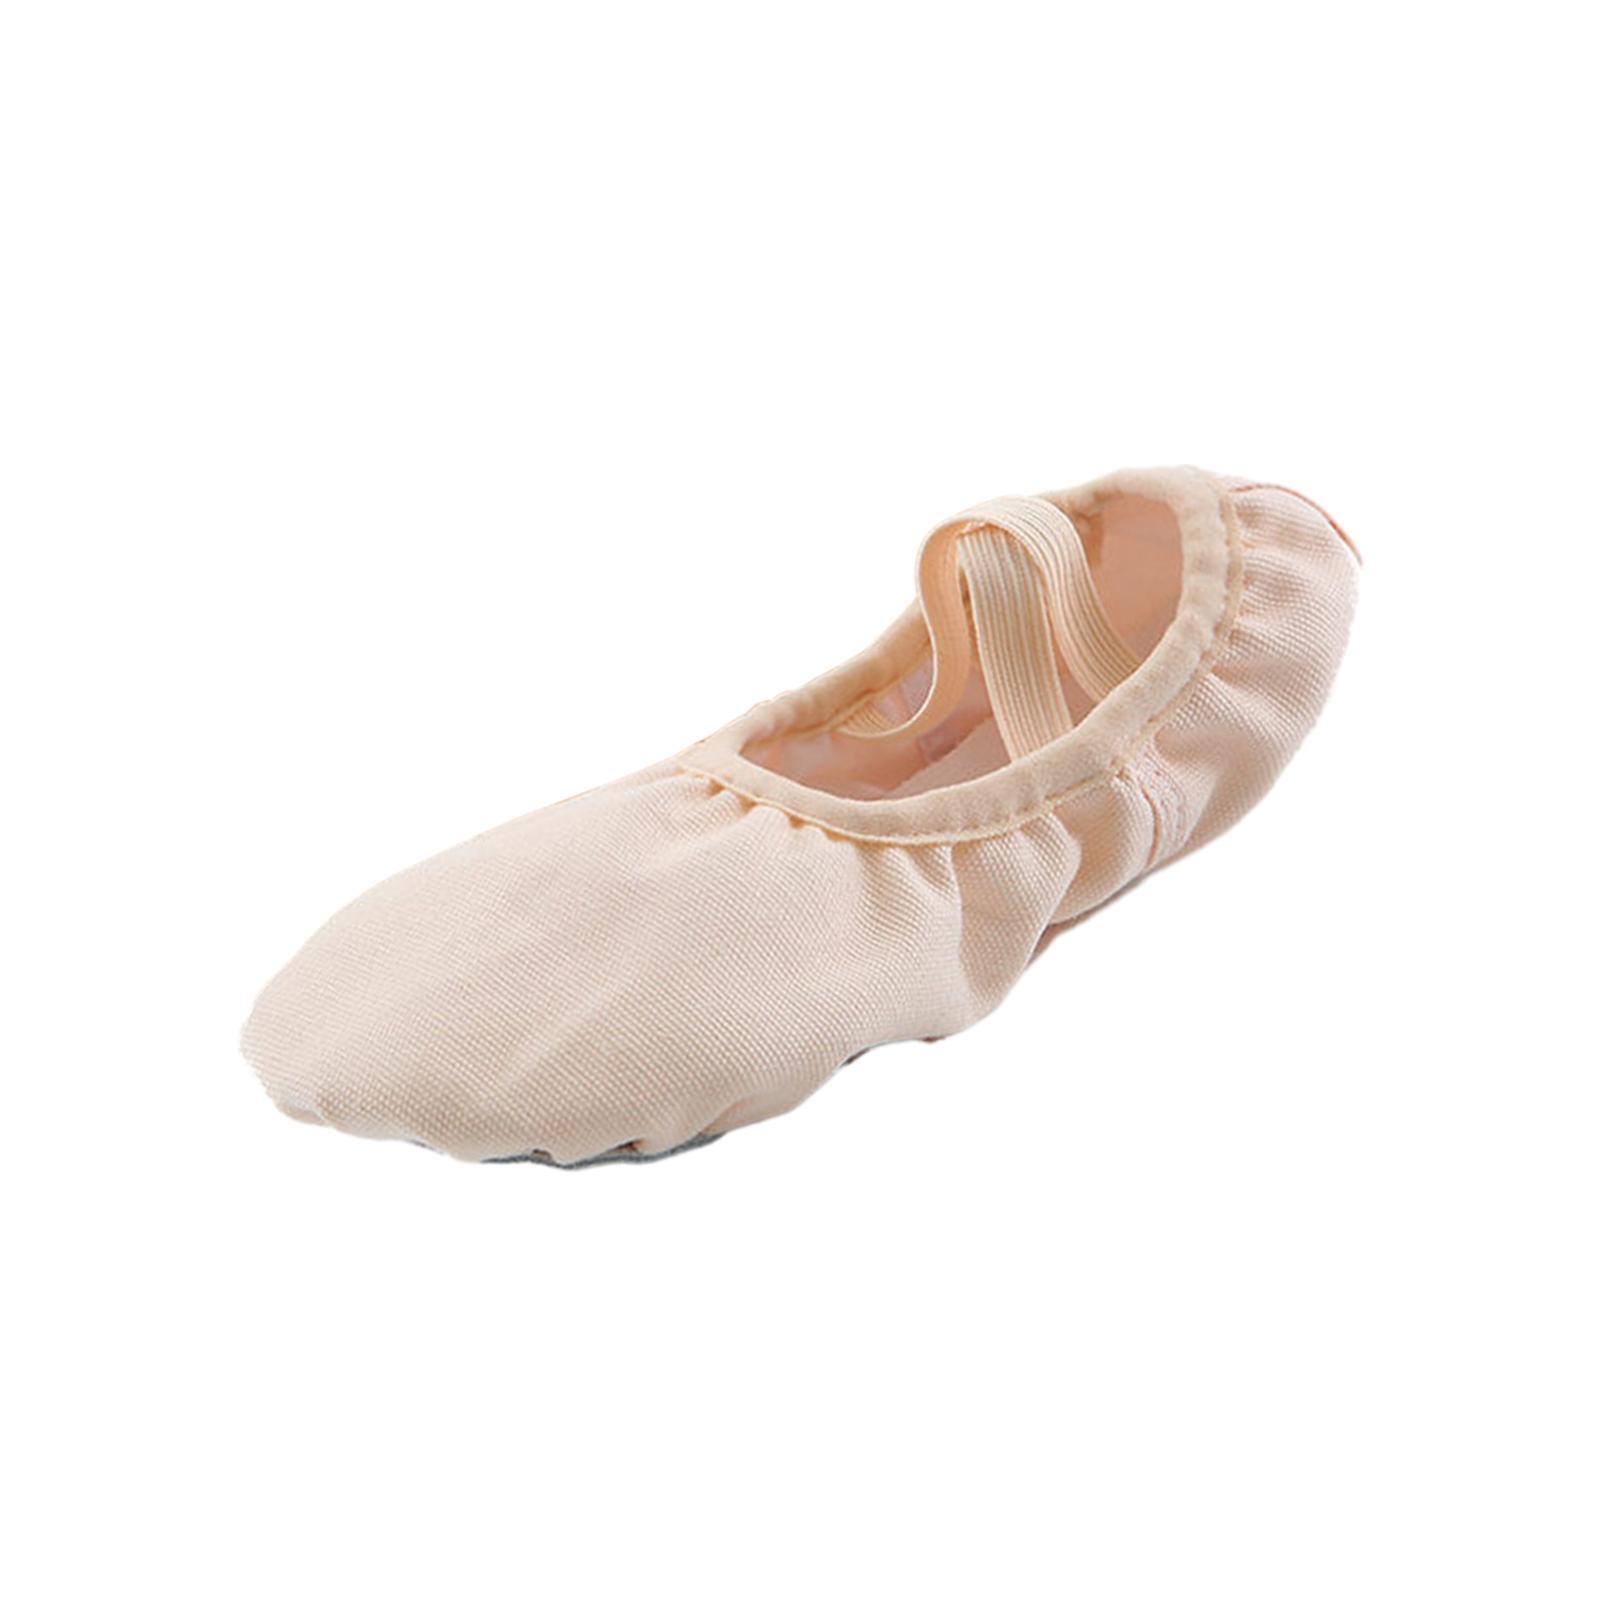 Sports Ballet Shoes for Women Girls, Women's Ballet Slipper Dance Shoes Canvas Ballet Shoes Yoga Shoes